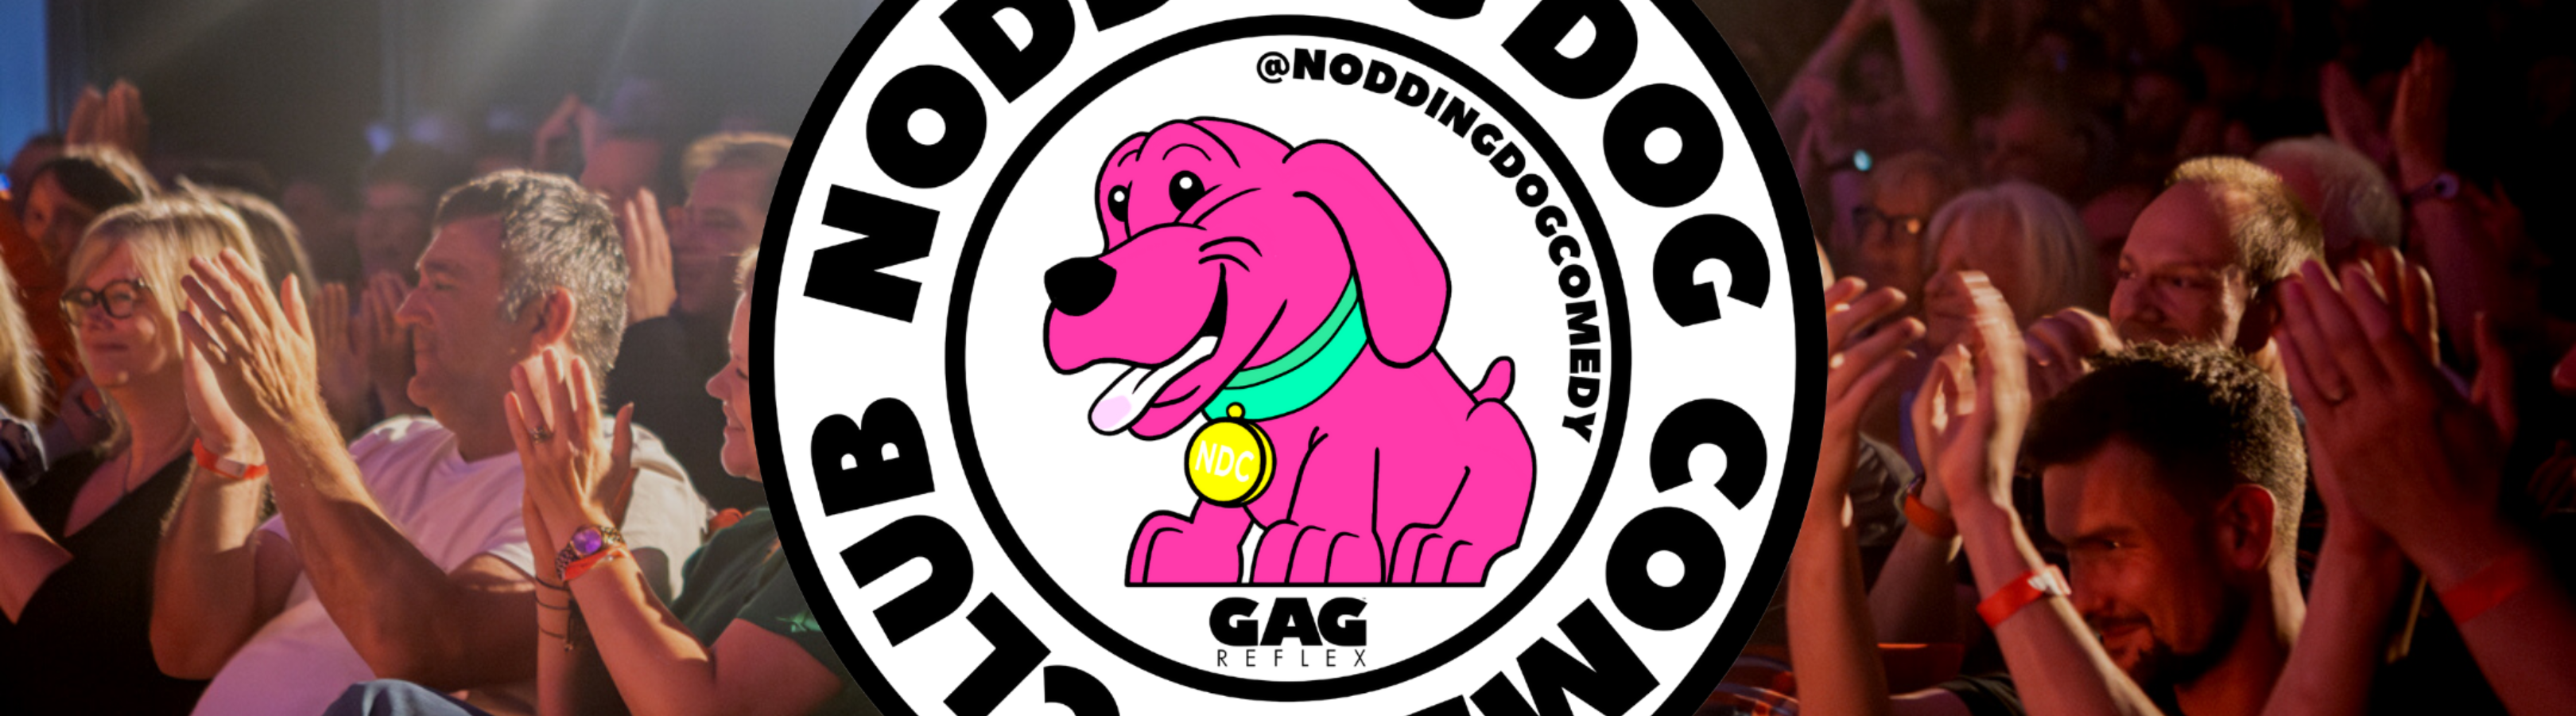 nodding dog comedy club homepage